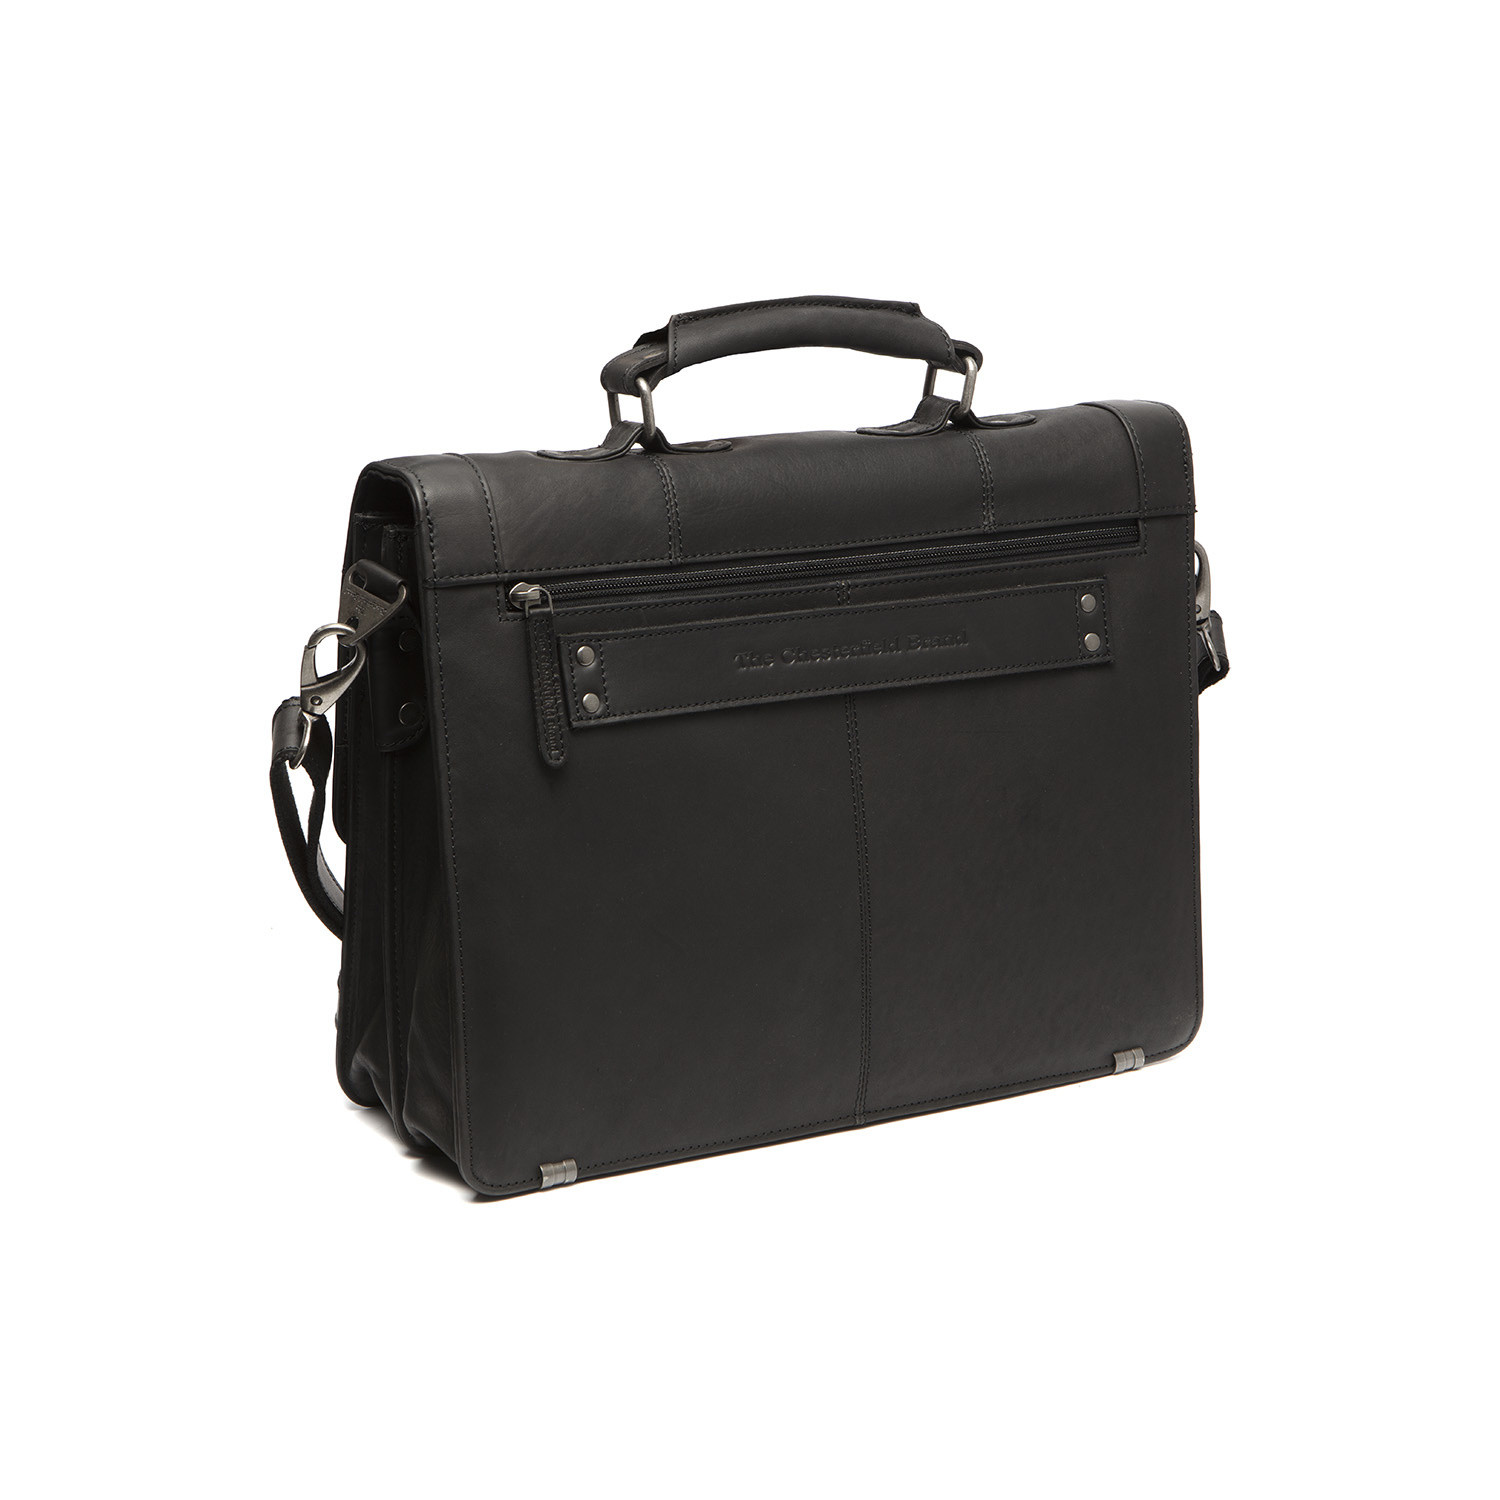 Leather Briefcase Black Stuttgart - The Chesterfield Brand